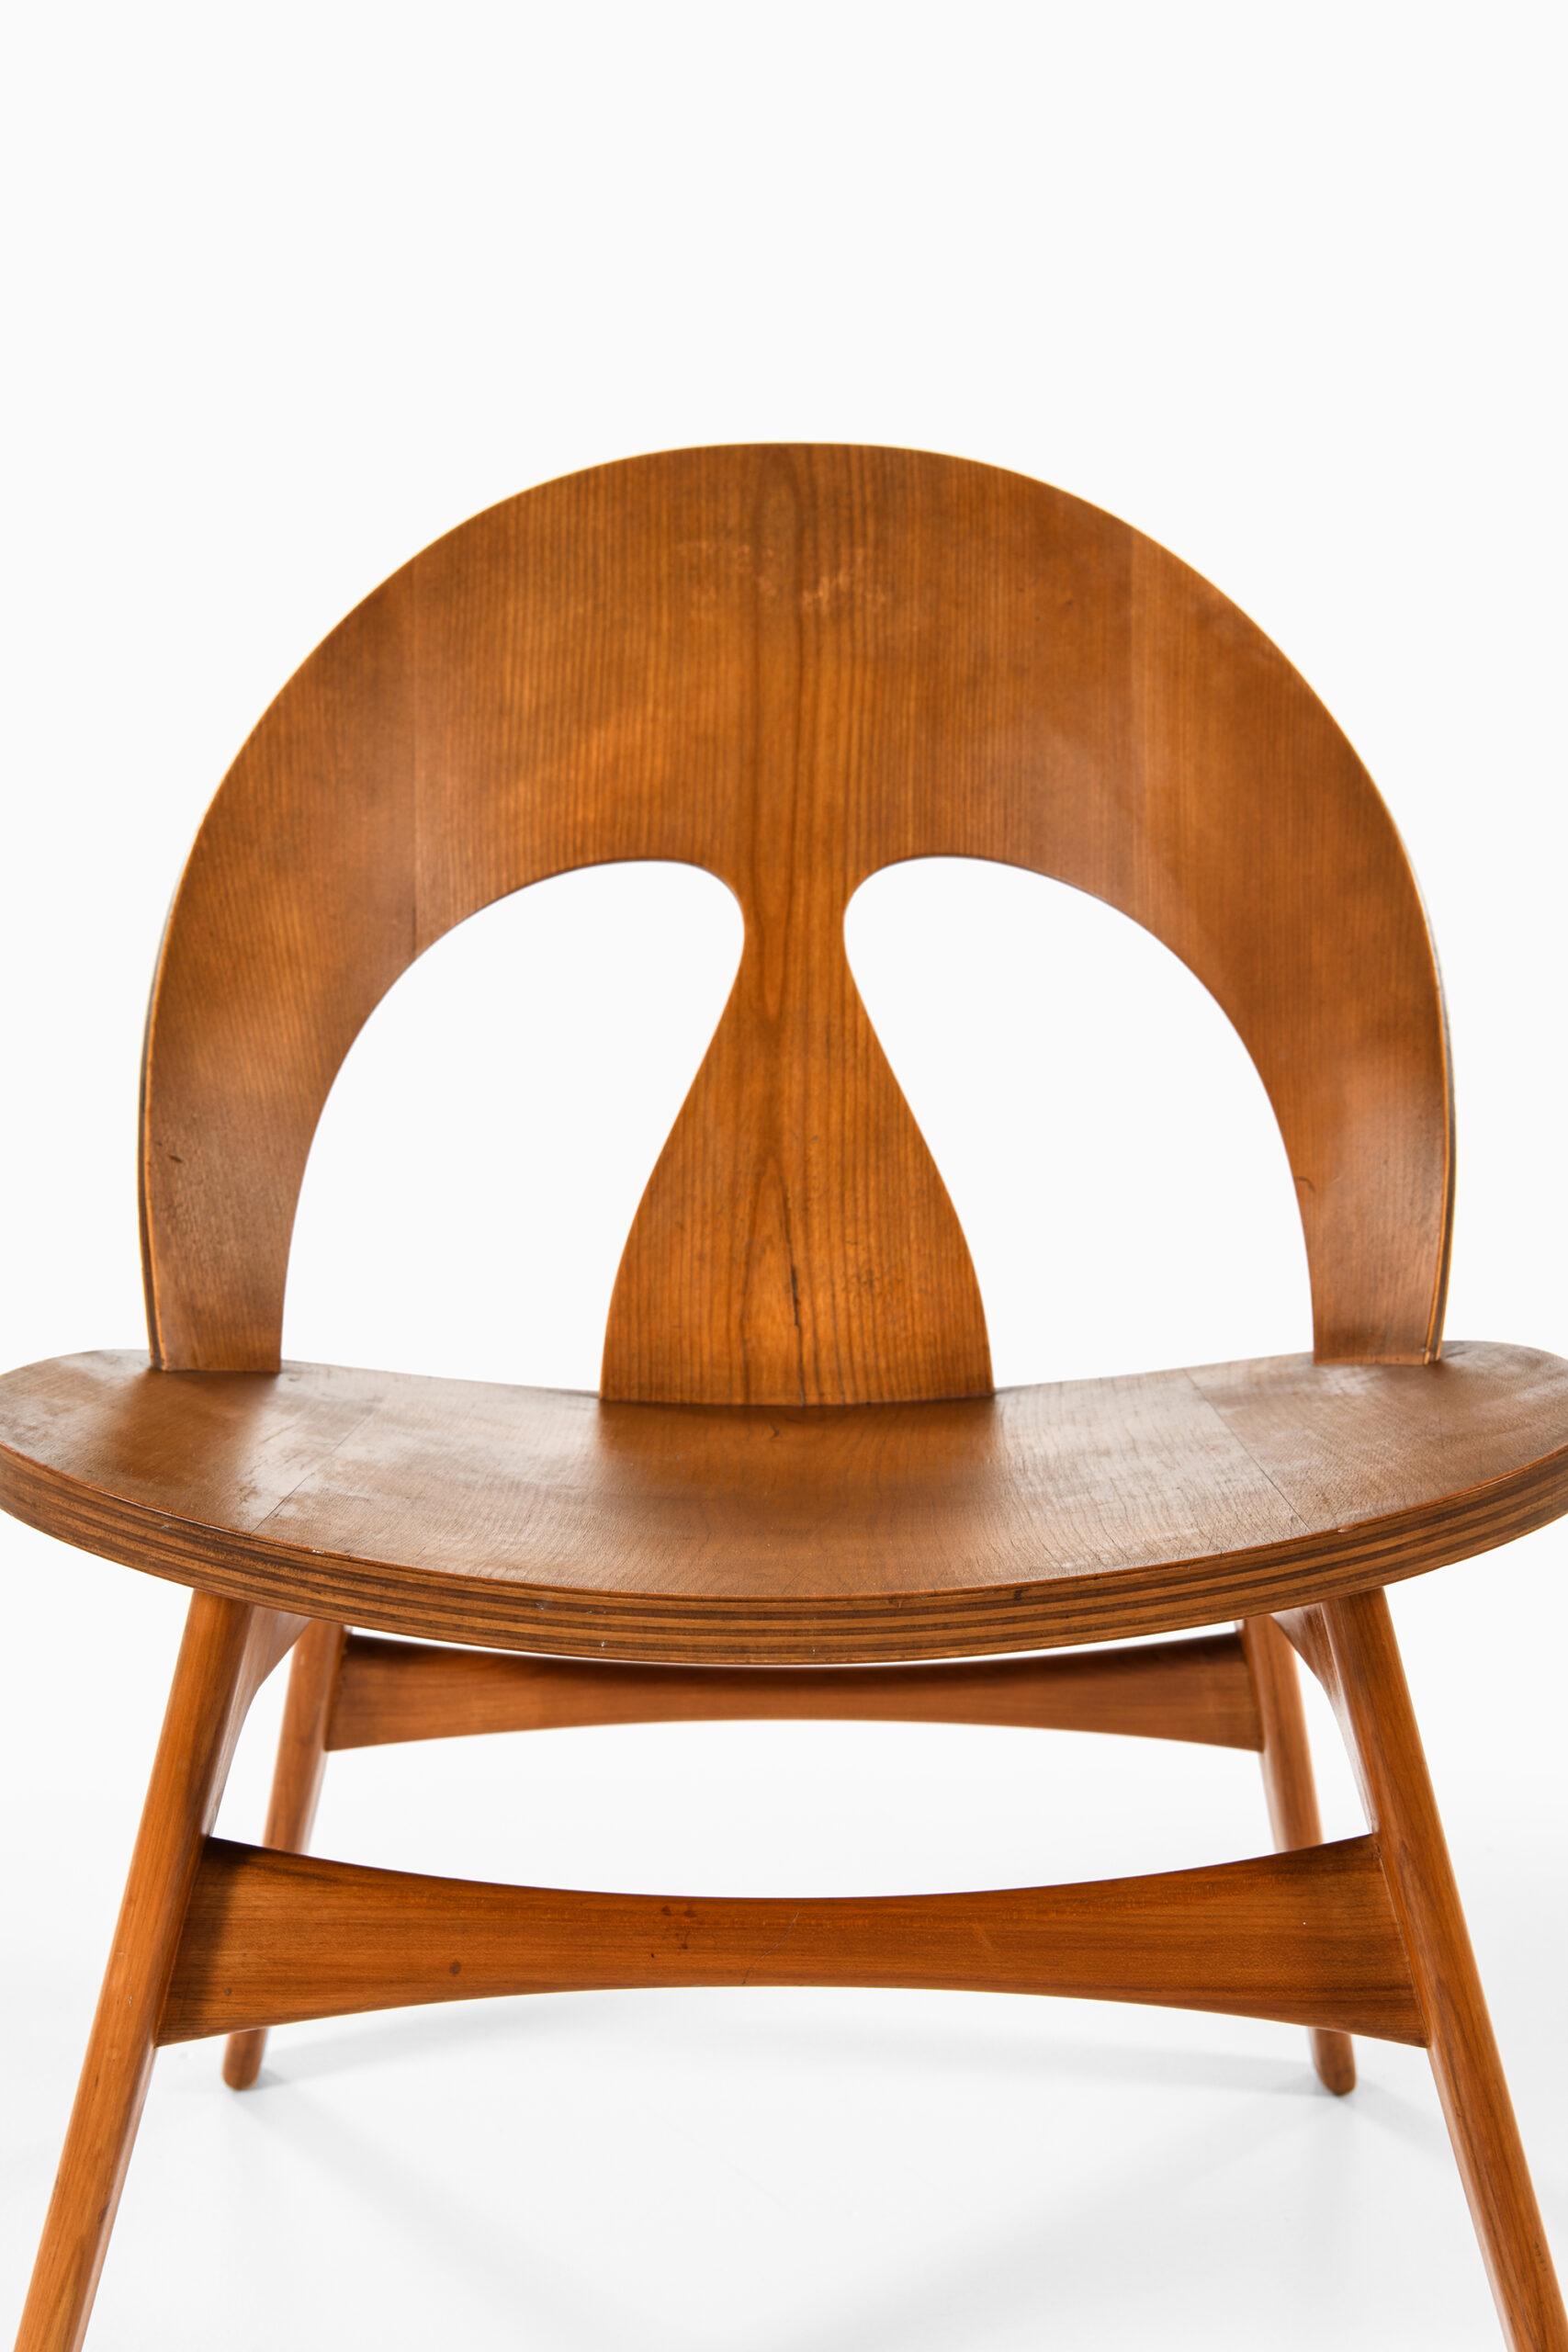 Very rare easy chair designed by Børge Mogensen. Produced by cabinetmaker Erhard Rasmussen in Denmark.